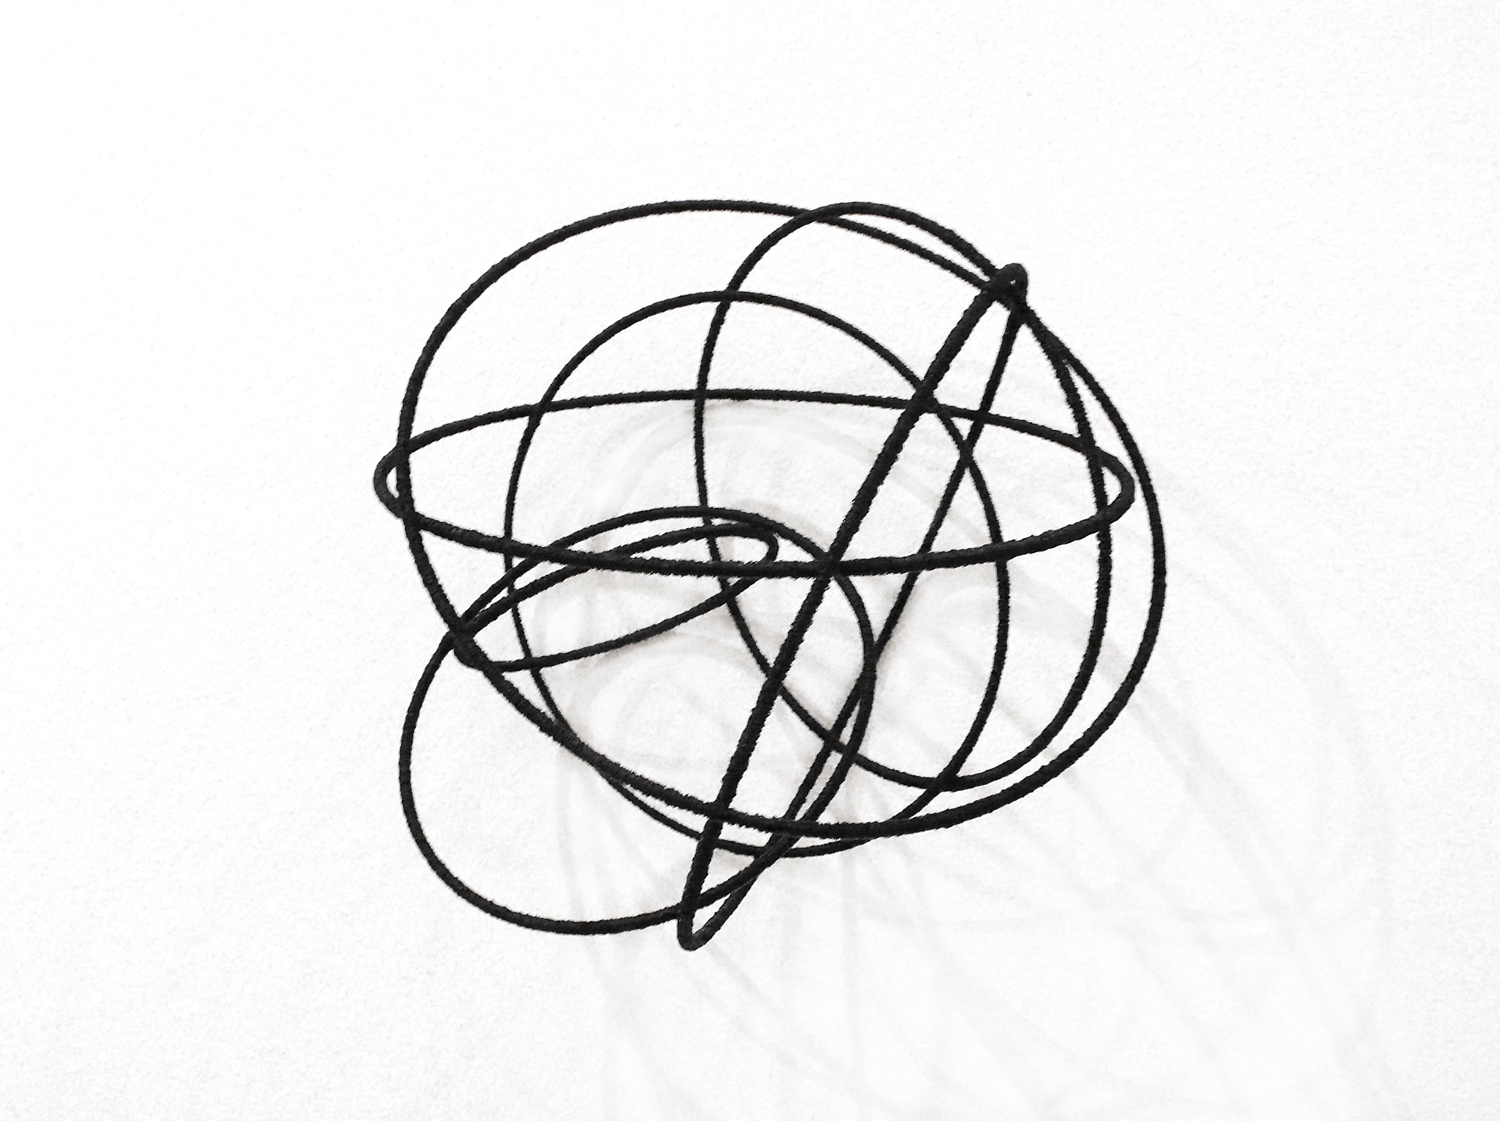   Island Vl , 2012, metal, wire, diameter ca 30cm 